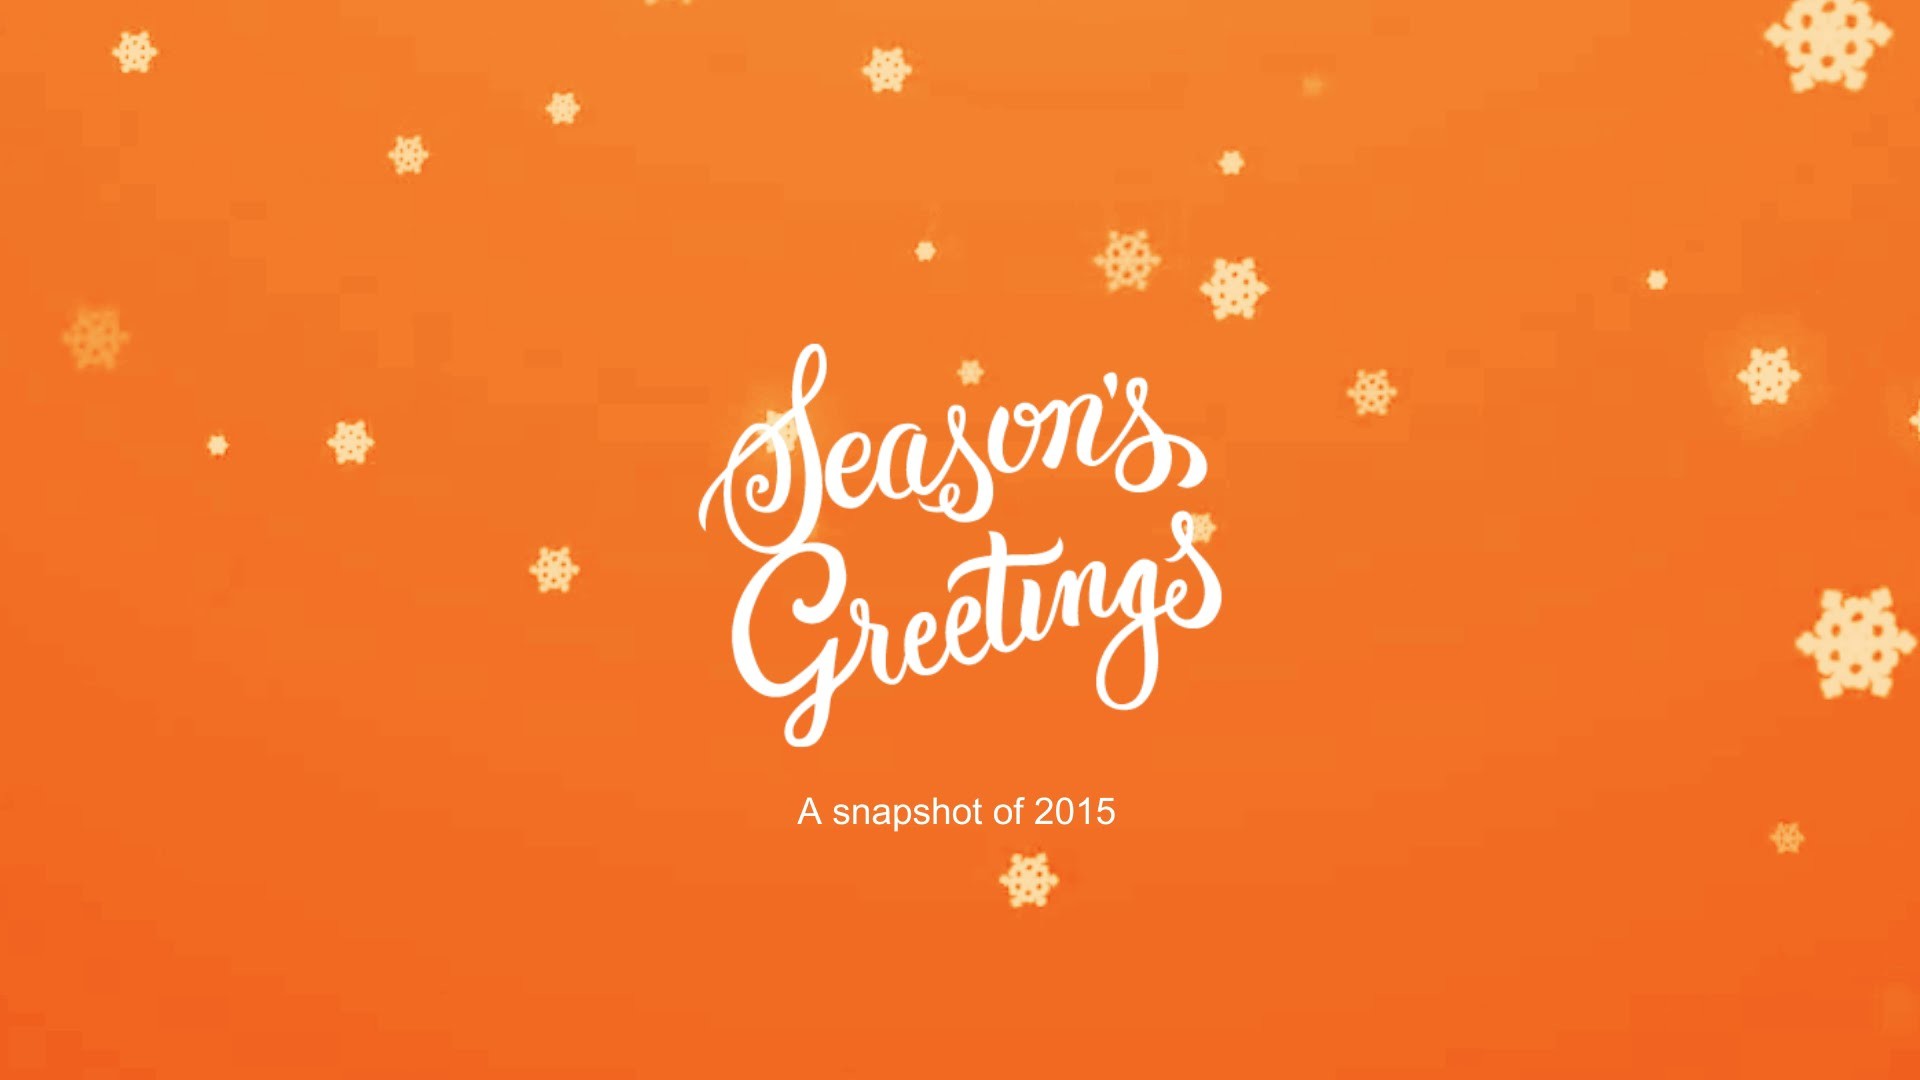 1920x1080 Season's Greetings - a snapshot of 2015